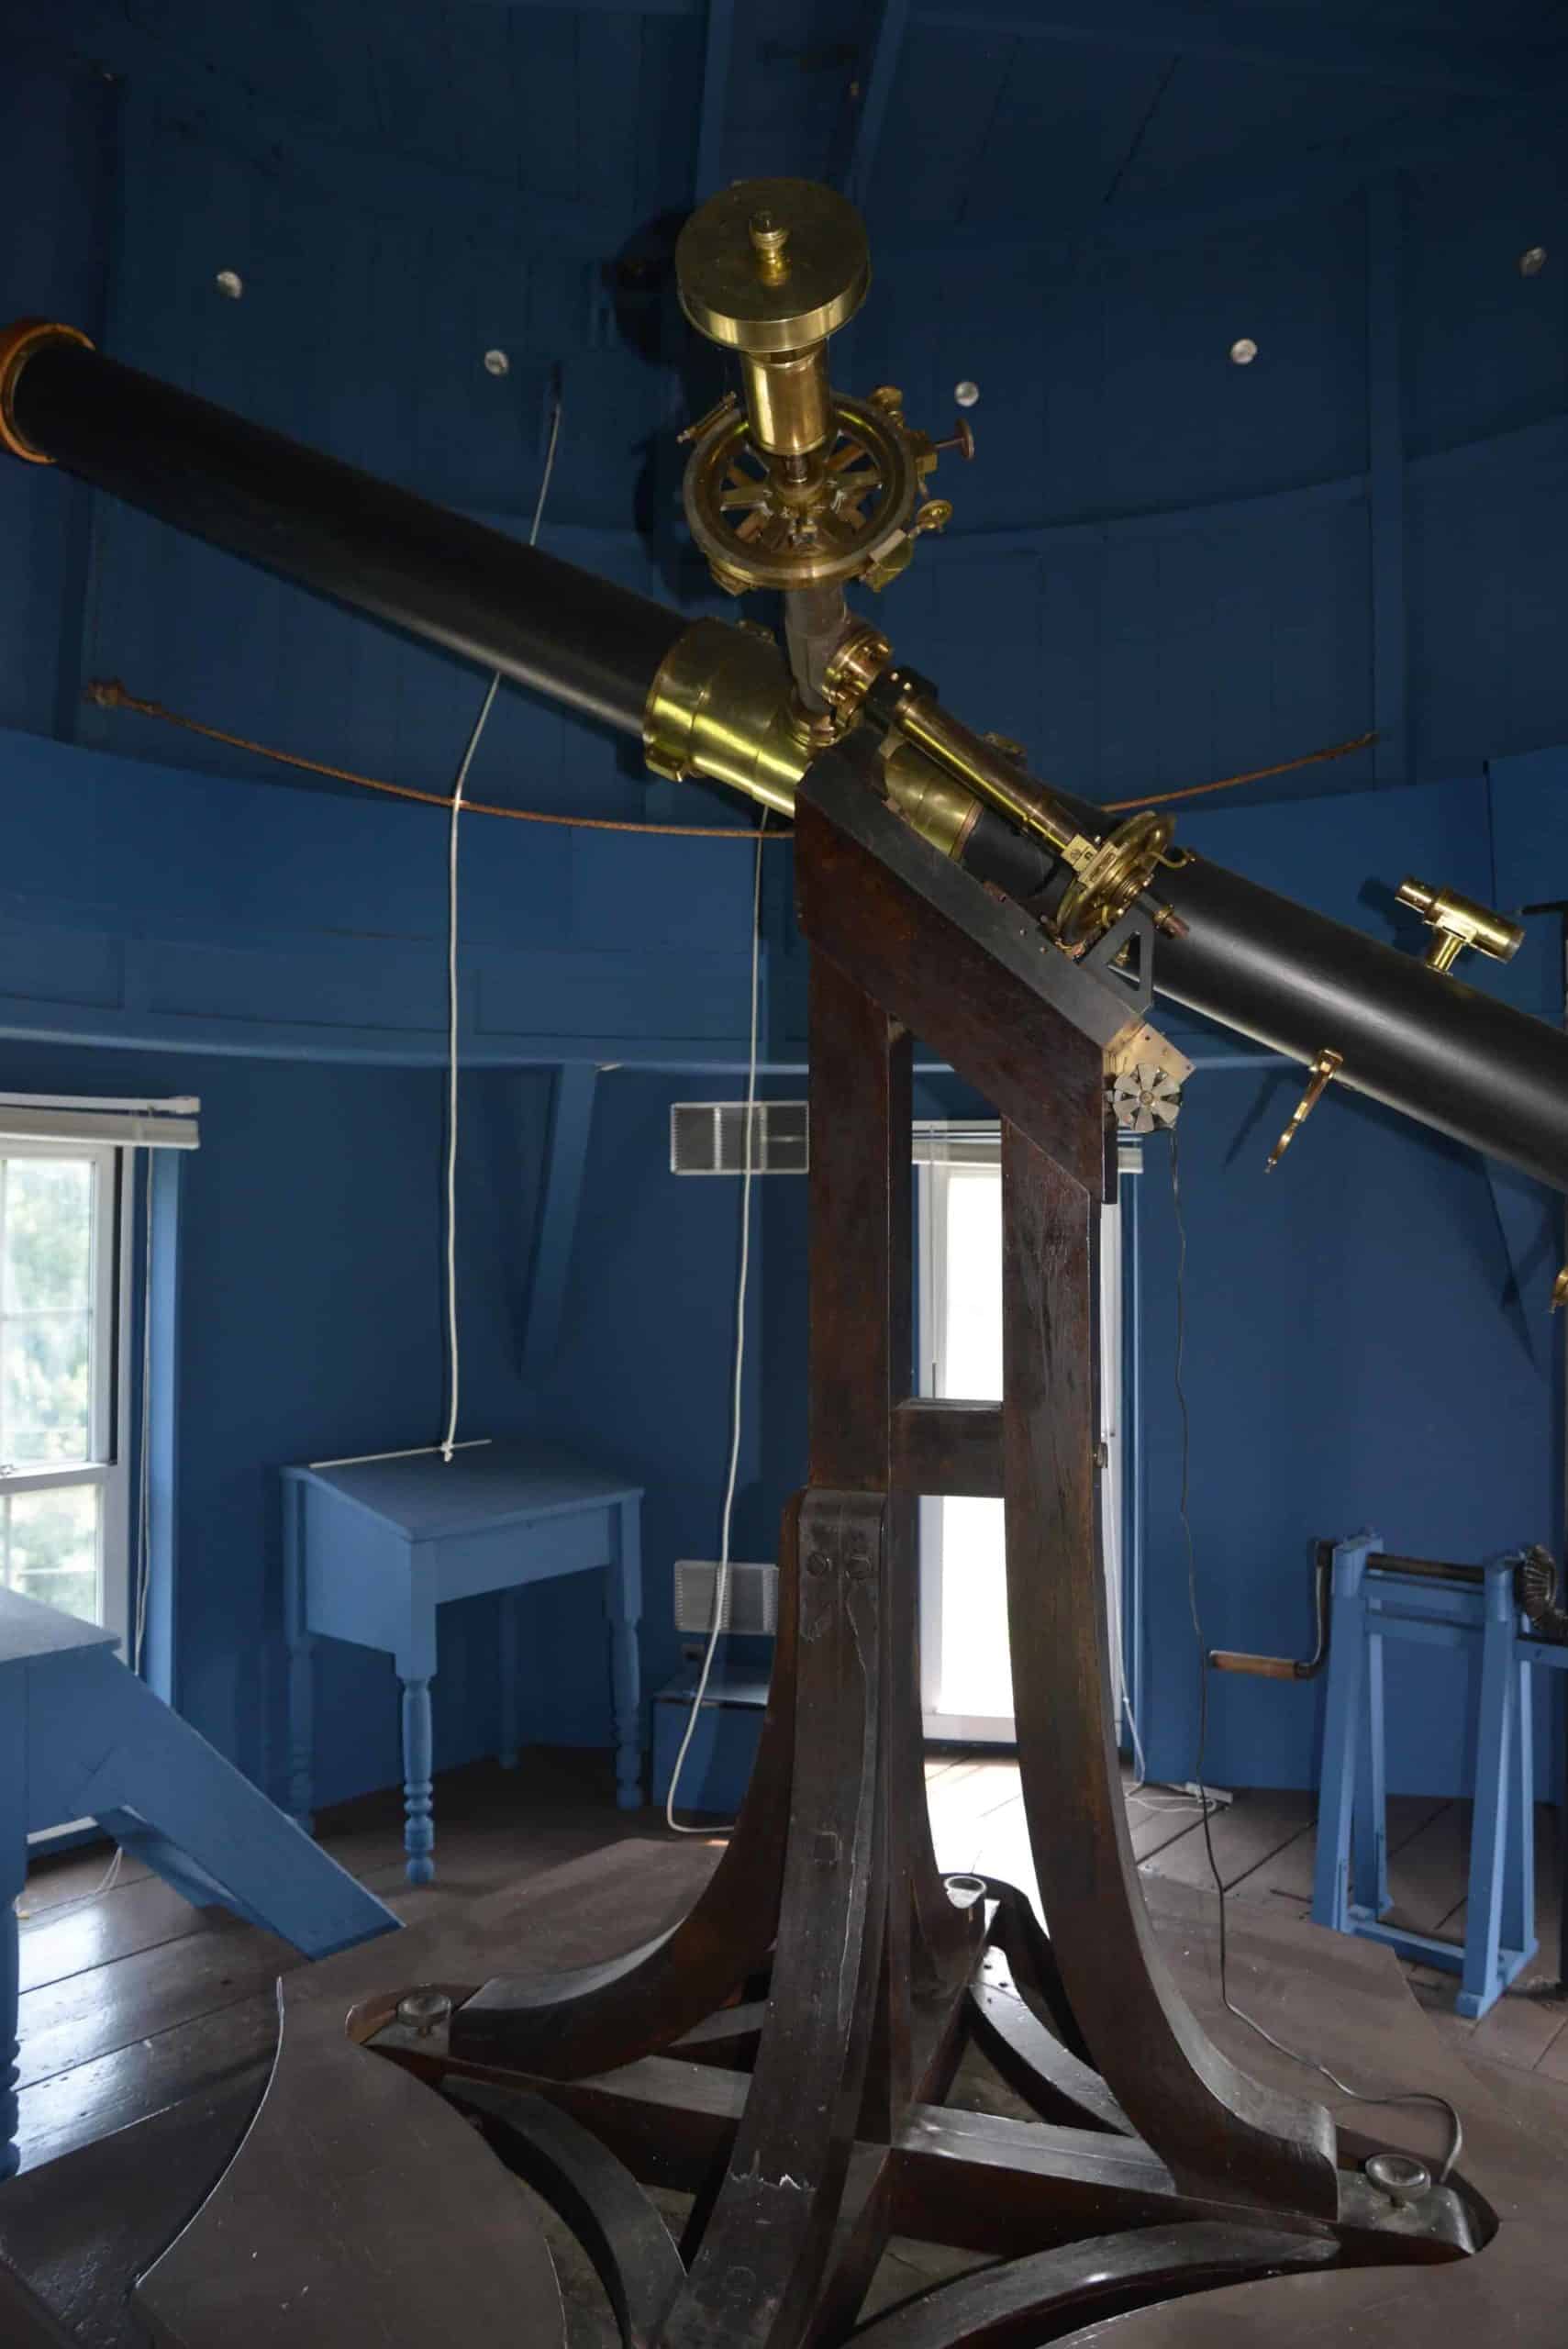 Williams College's 19th-century Alvan Clark telescope. Image courtesy of Professor Jay Pasachoff